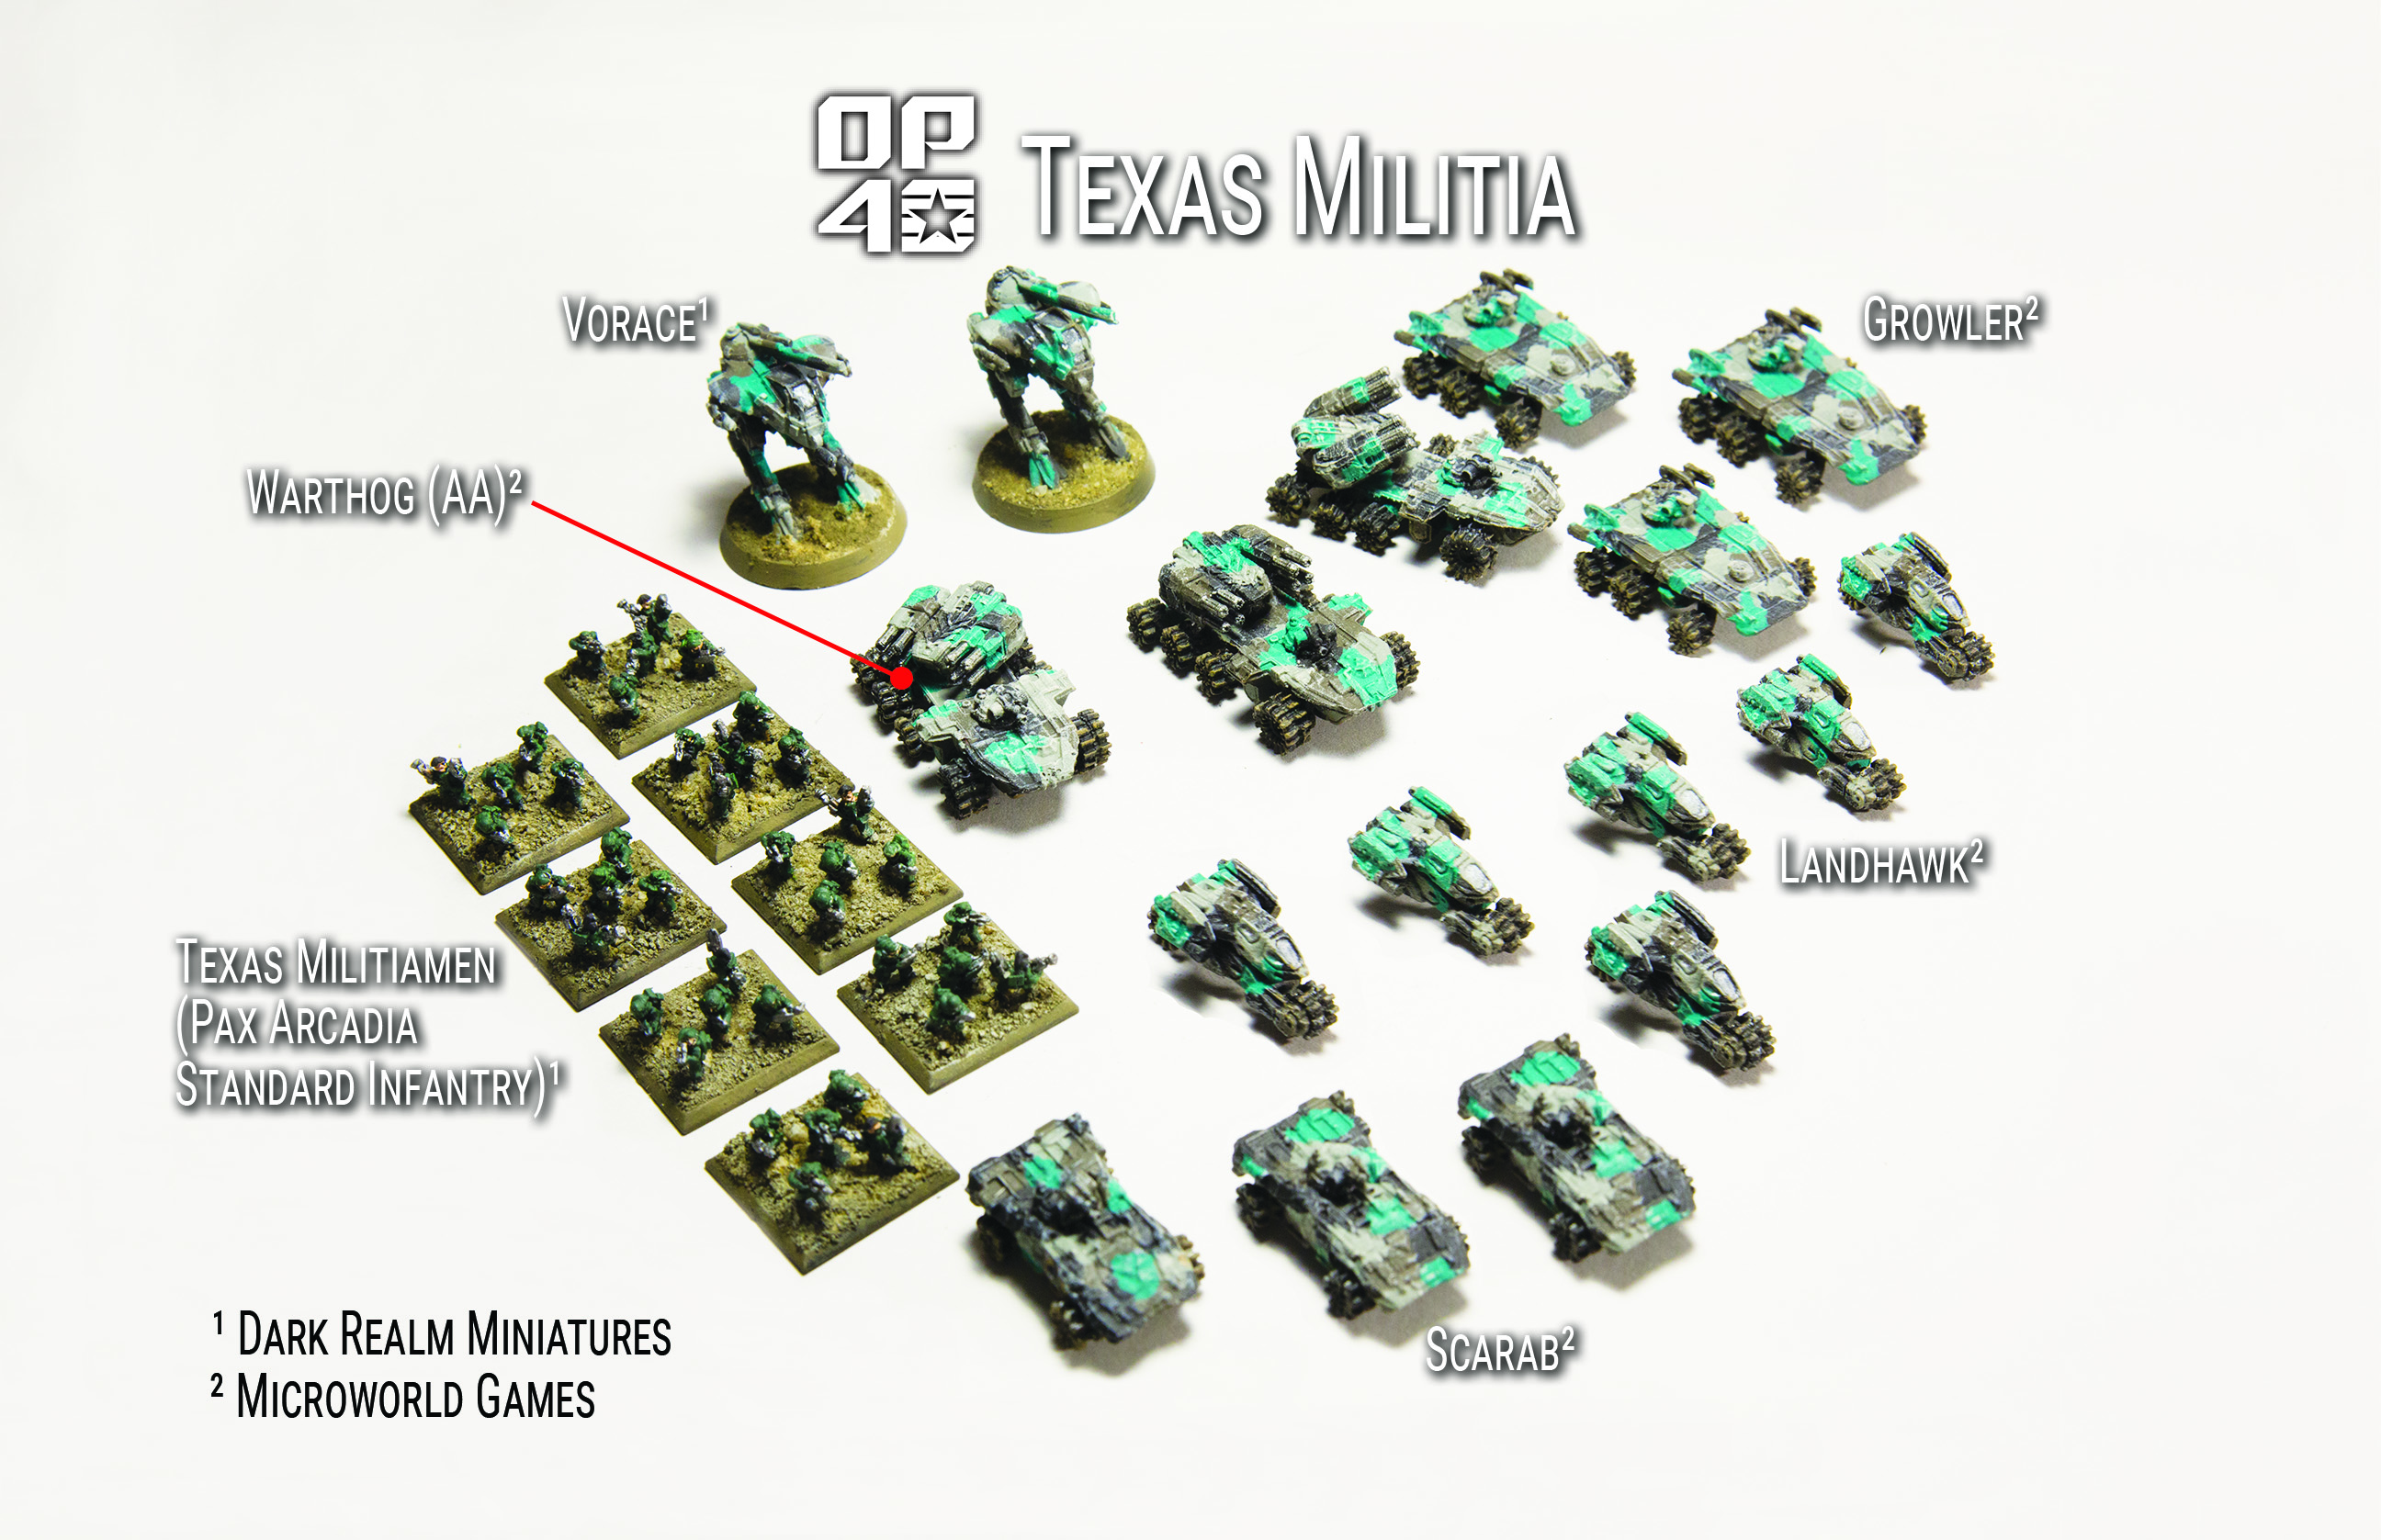 OPFOR Texas Militia